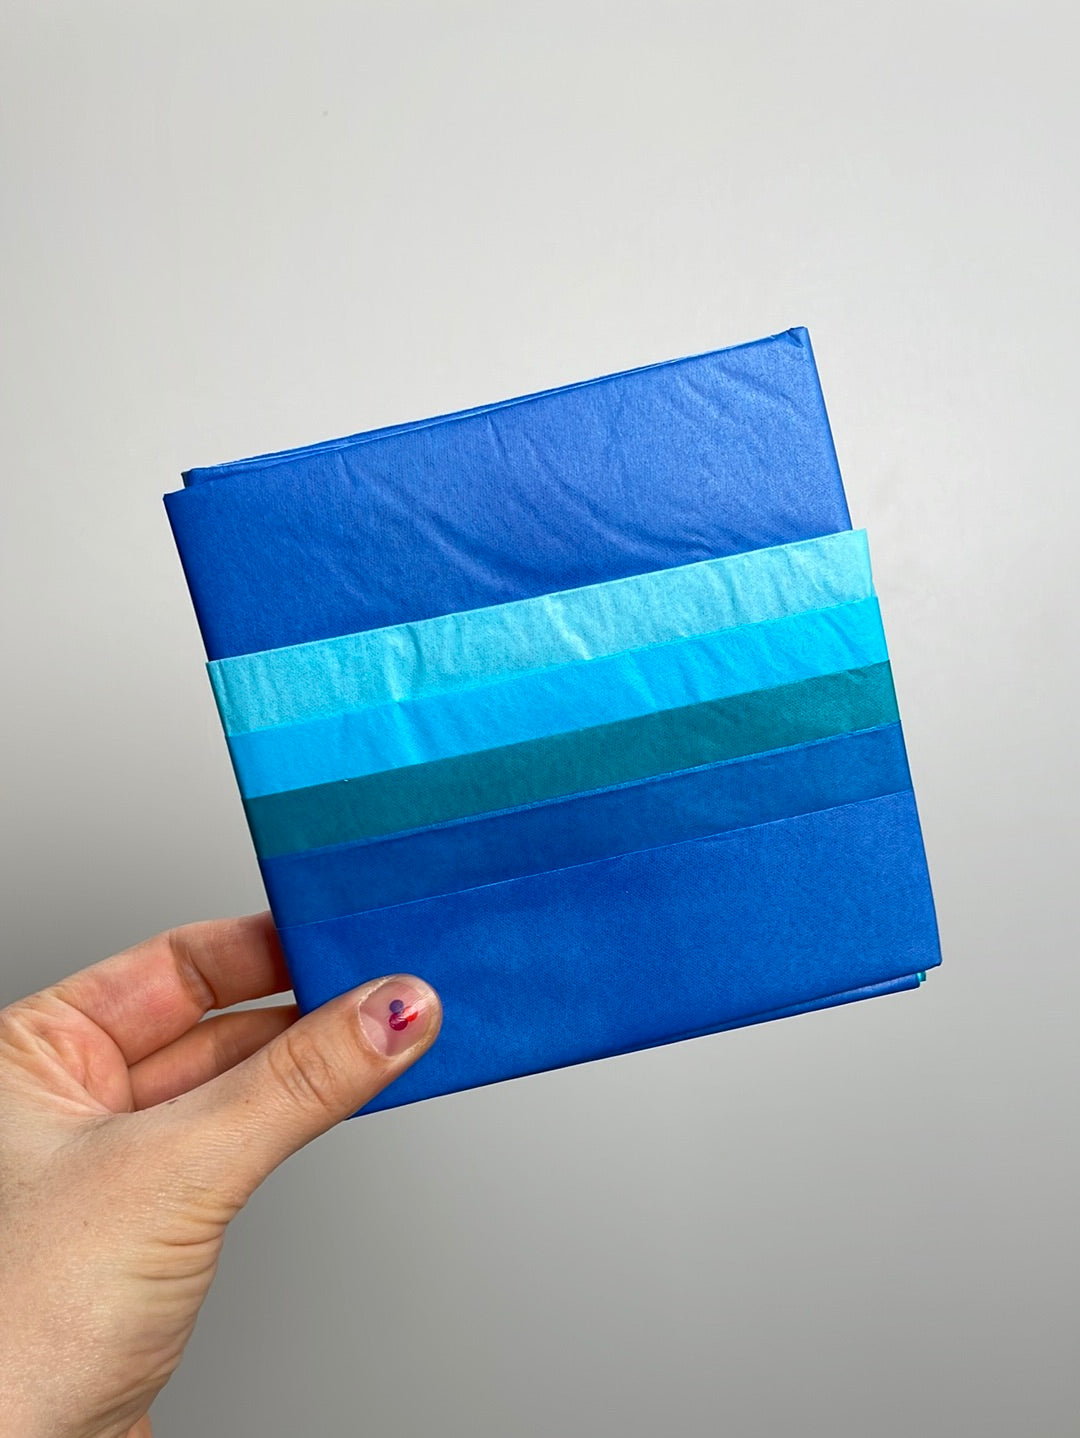 Paper Poetry • Seidenpapier blau sortiert 50x70cm 5 Bogen